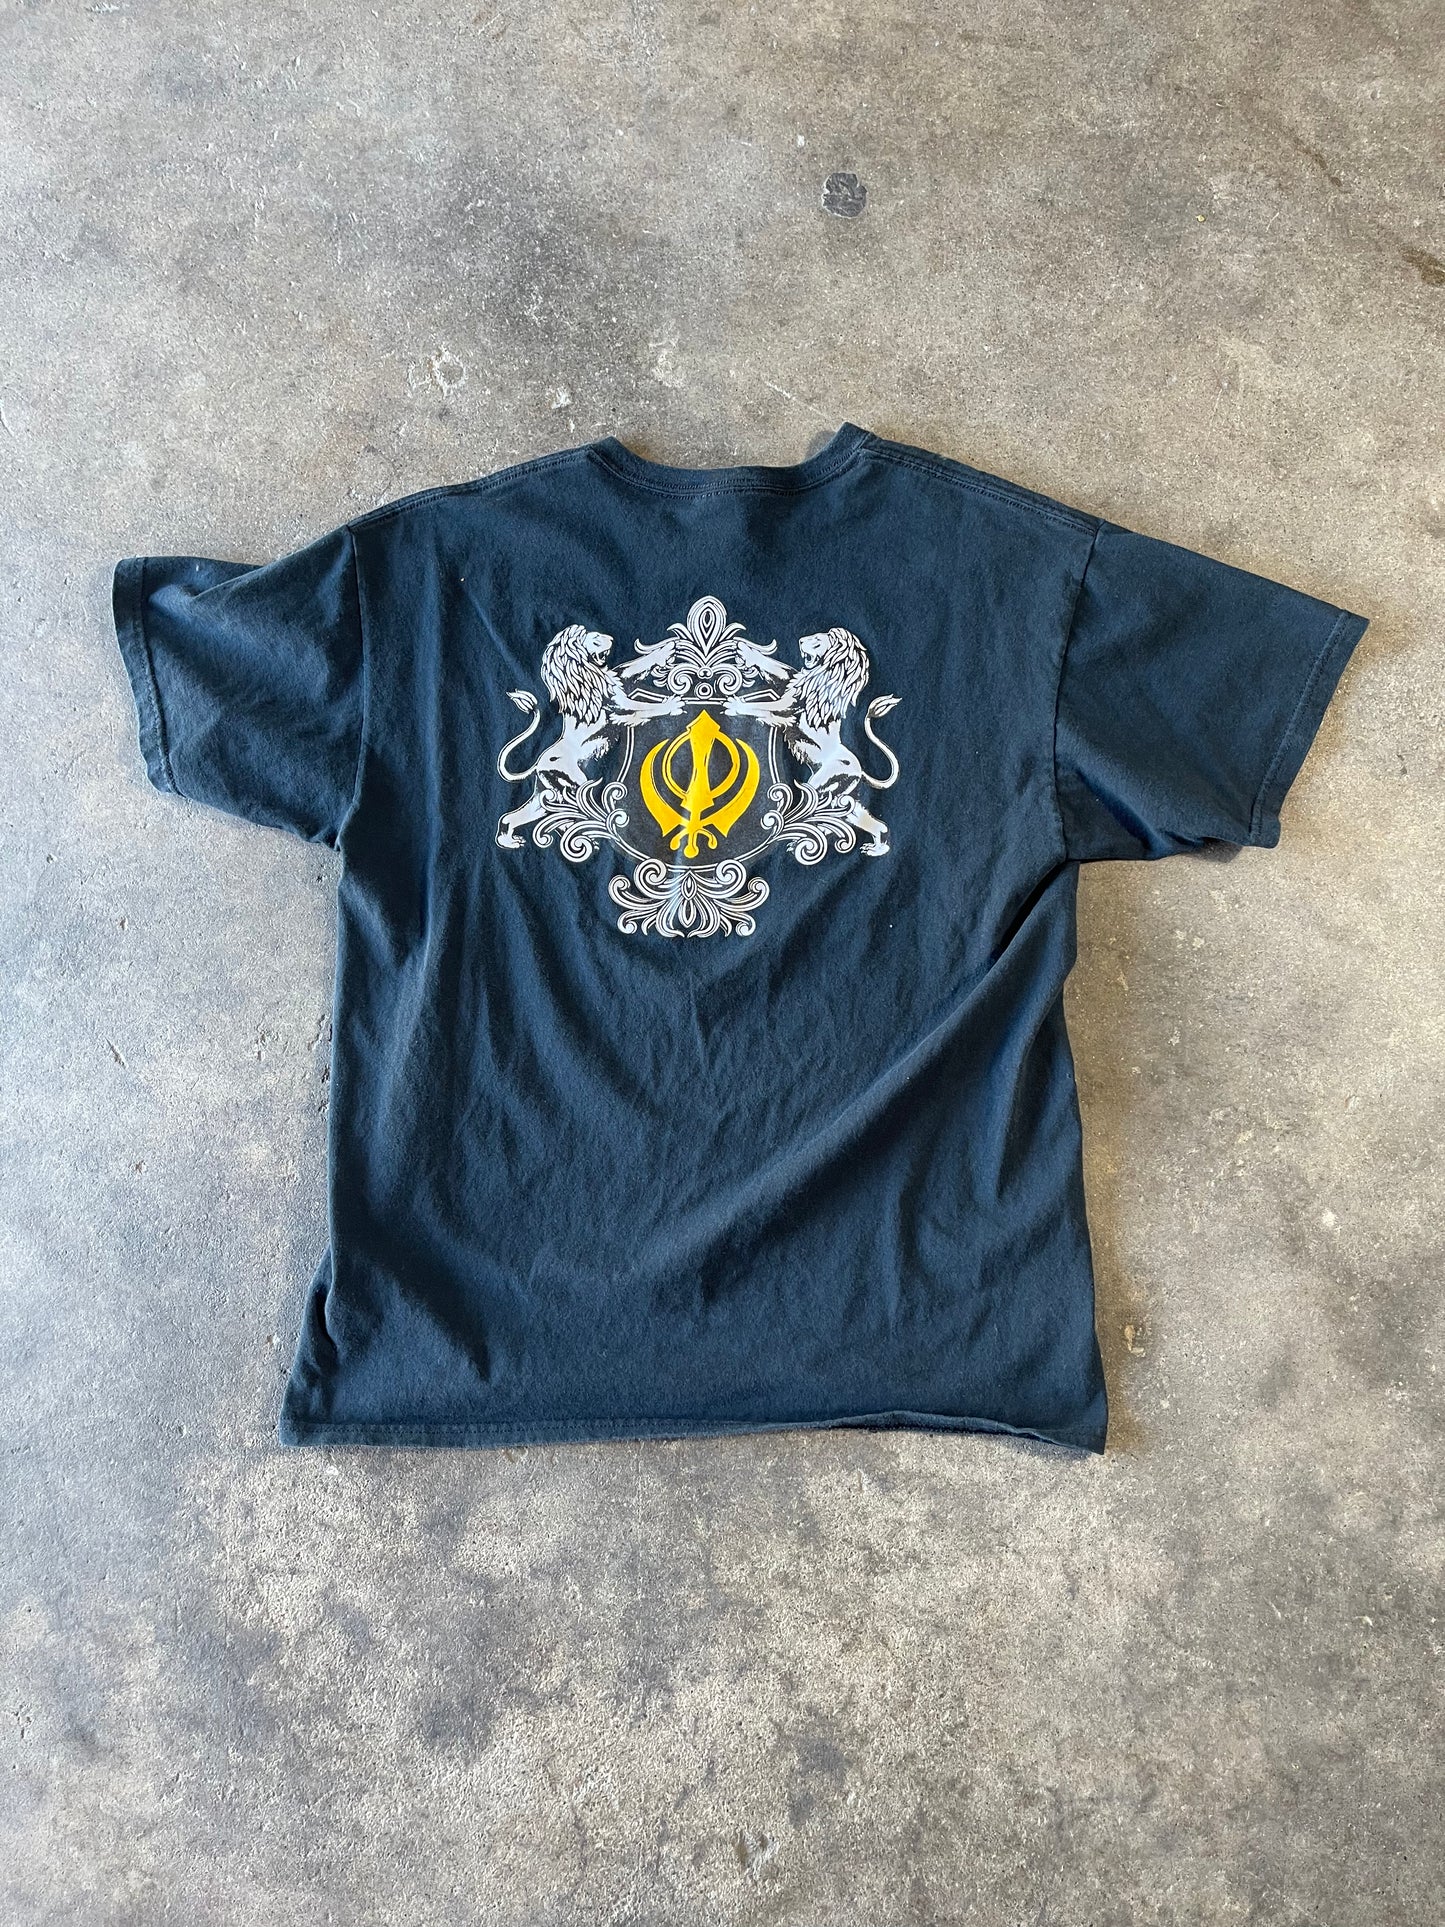 Black Lion Throne Shirt Large